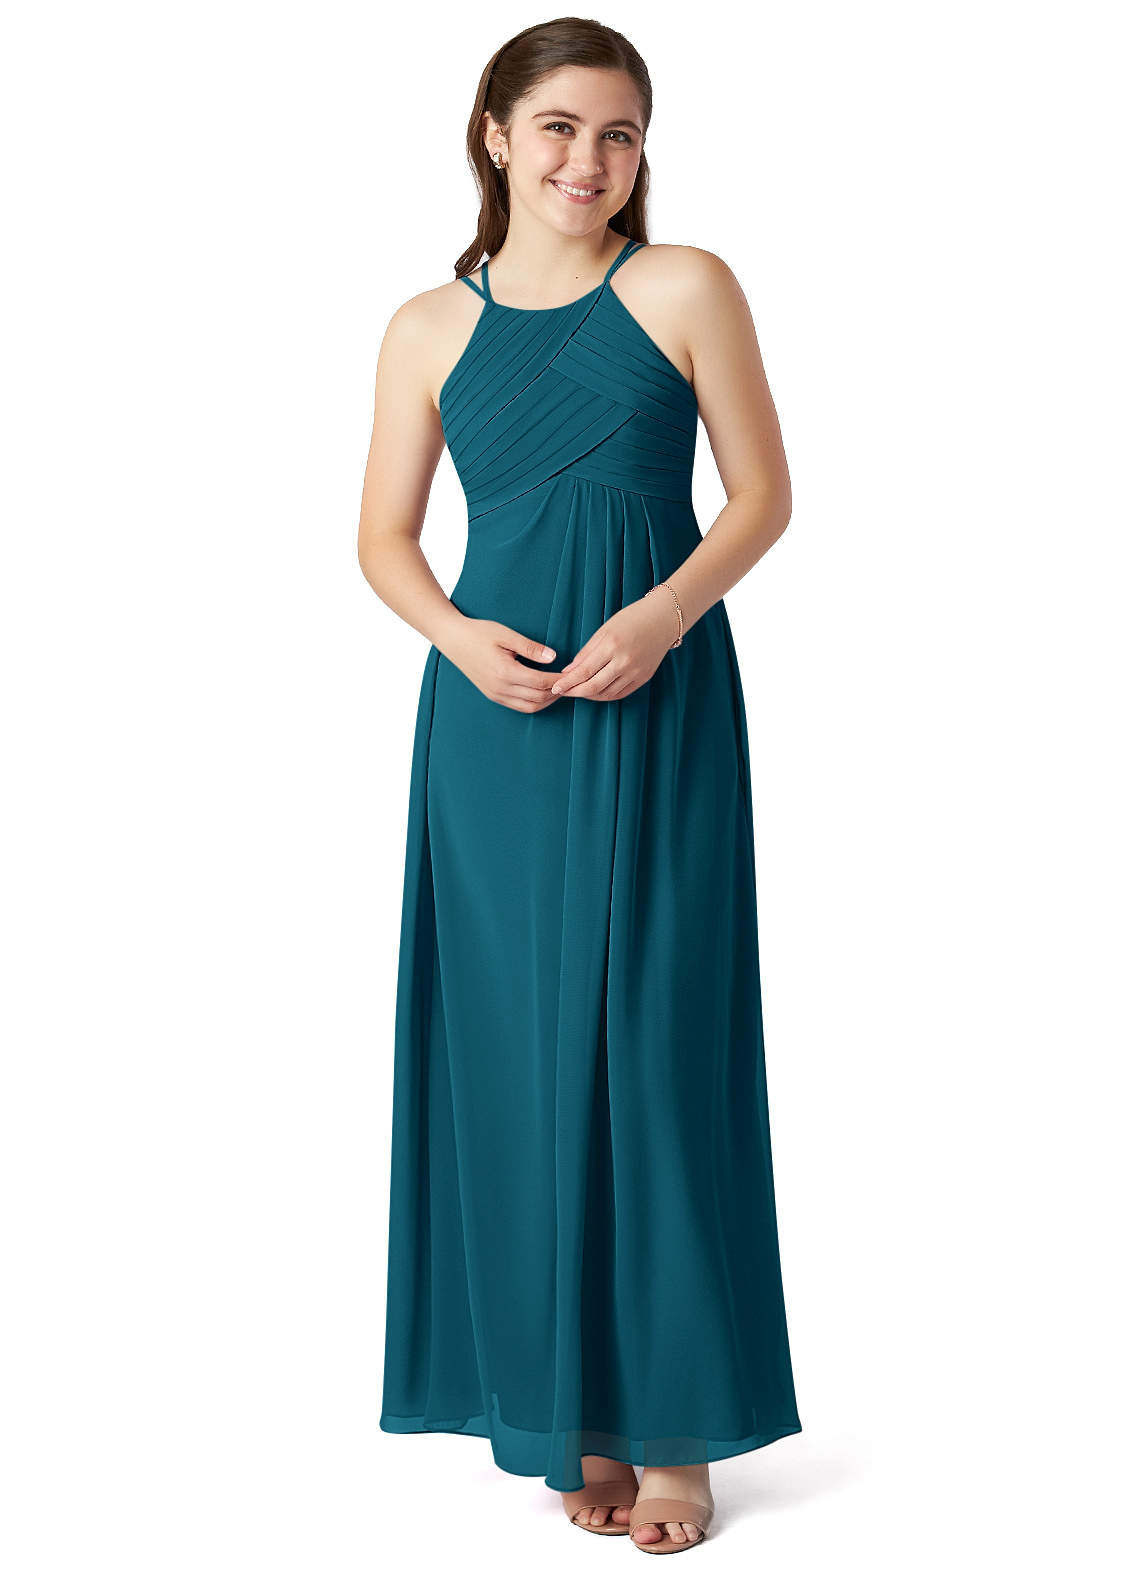 chanel blue satin dress